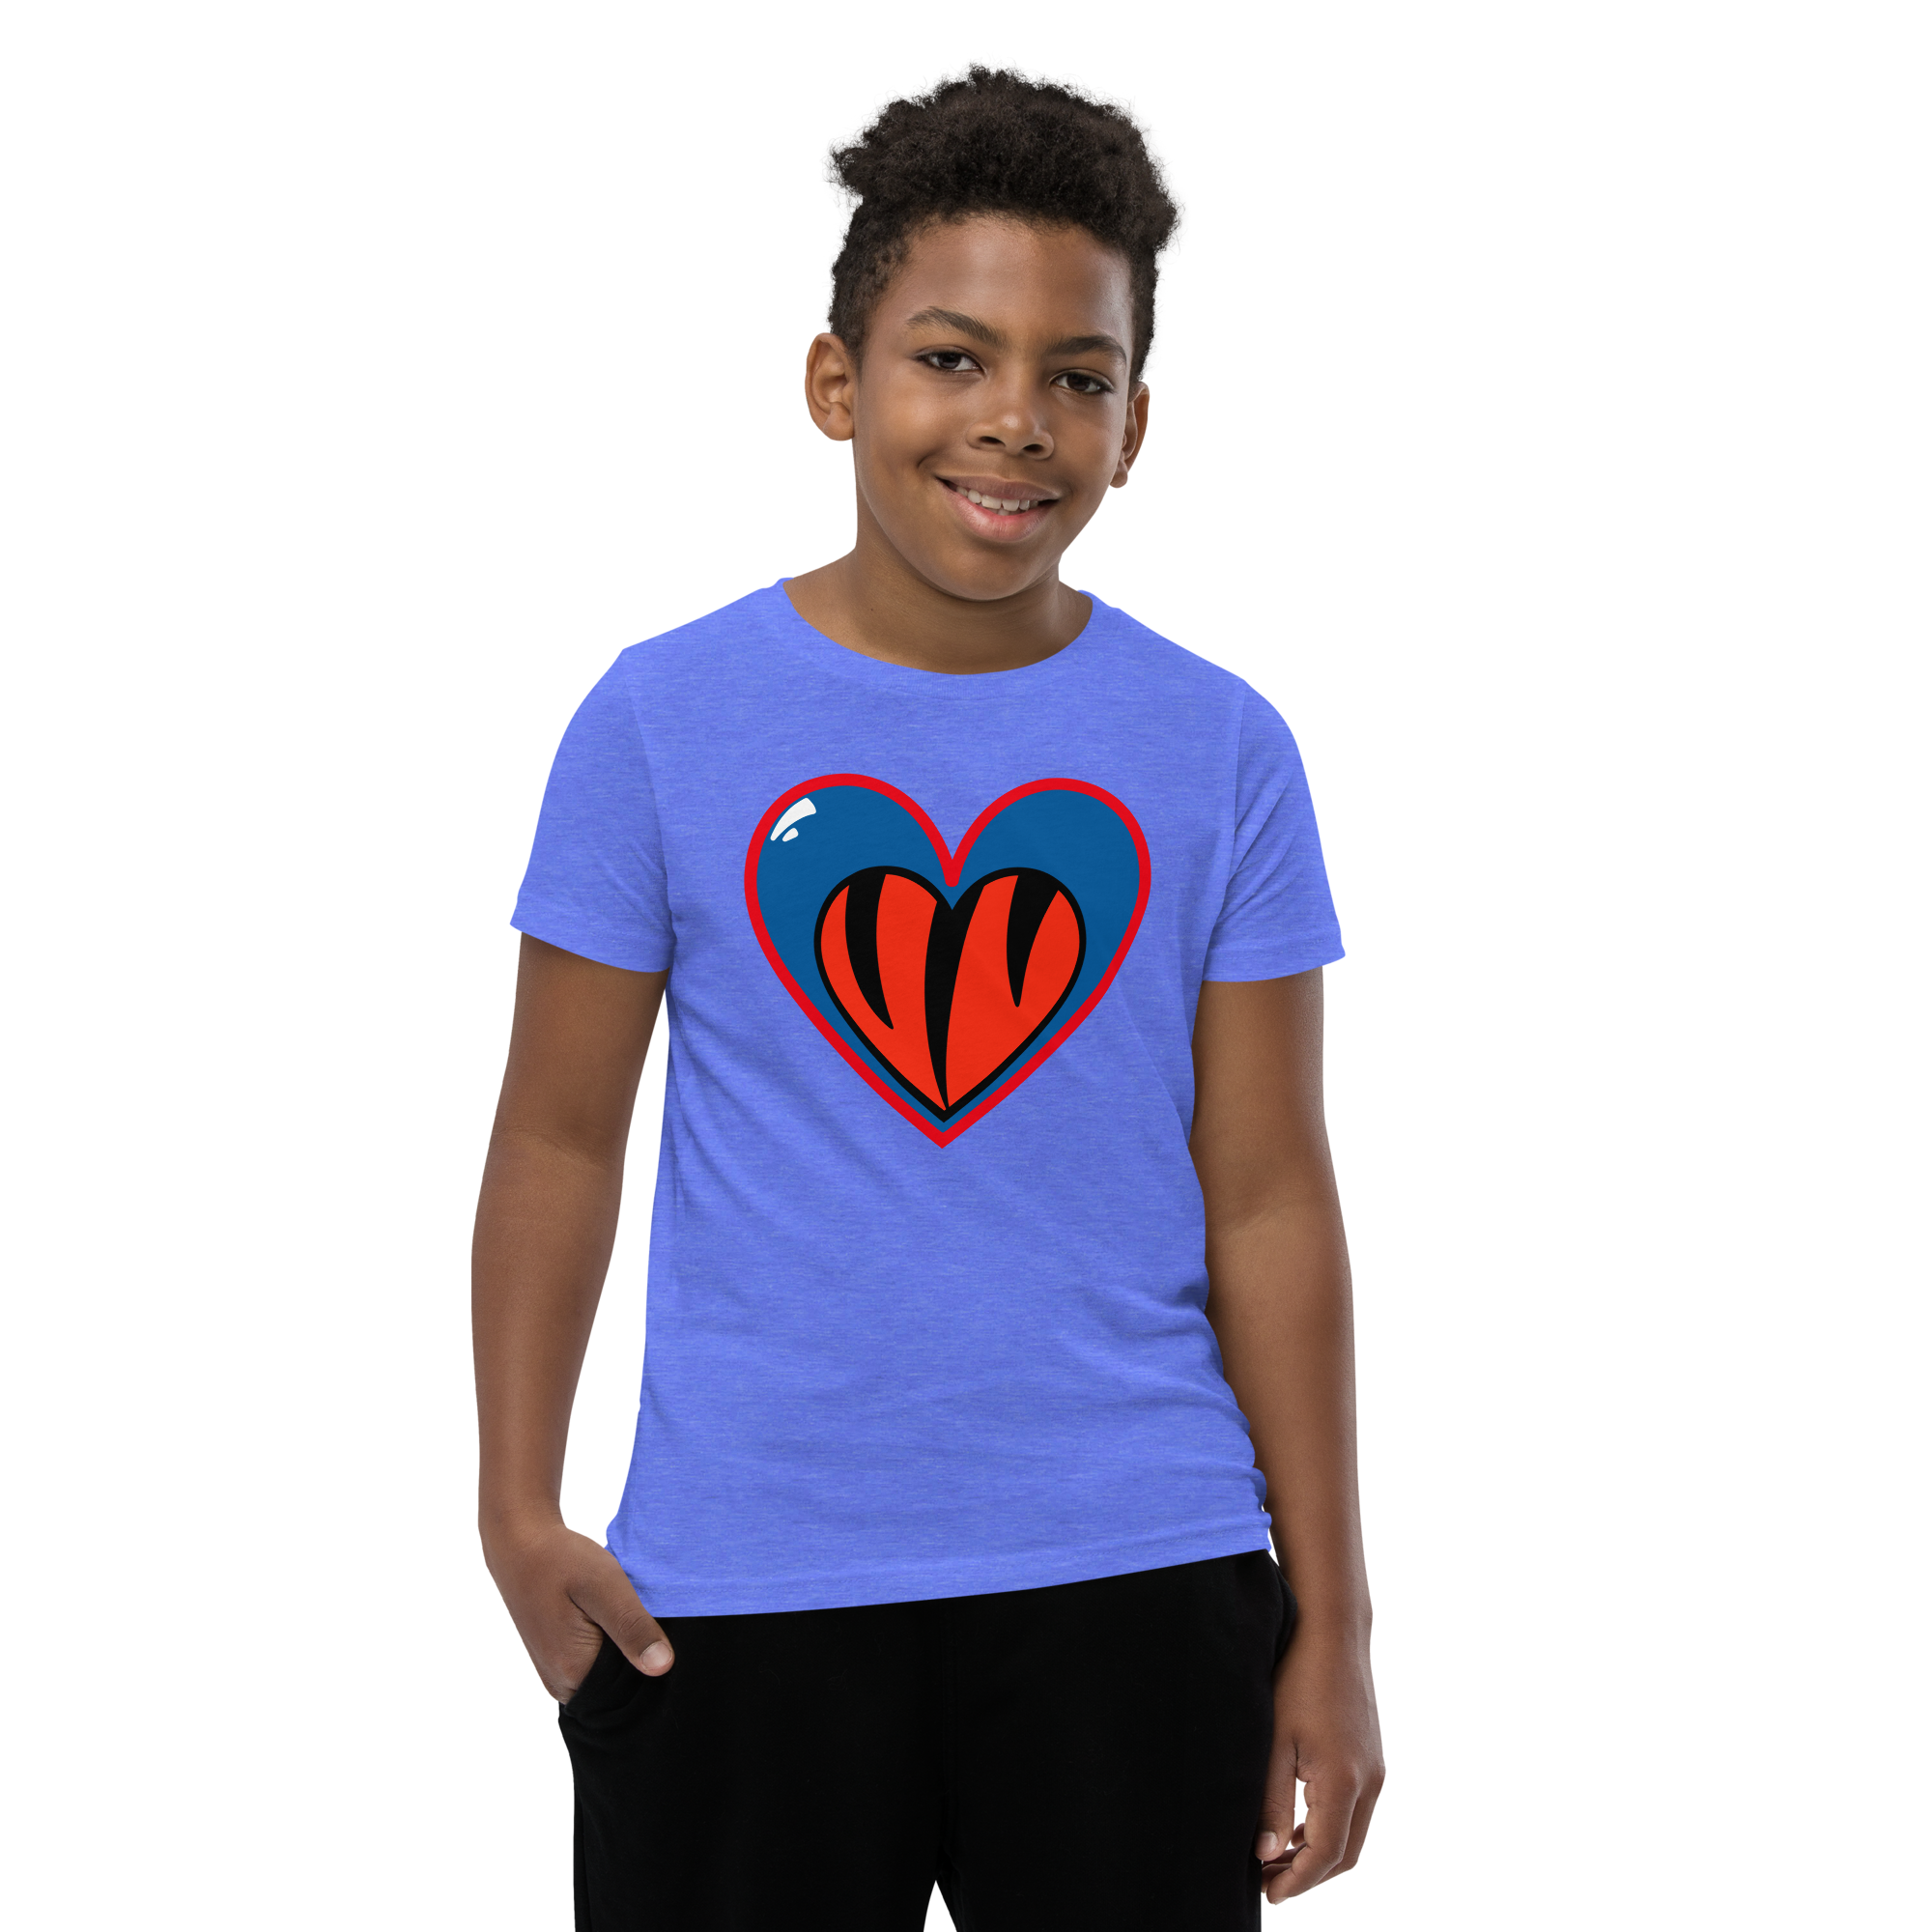 Pray For Damar Cincinnati Buffalo Heart Youth T-Shirt (100% Proceeds Donated)